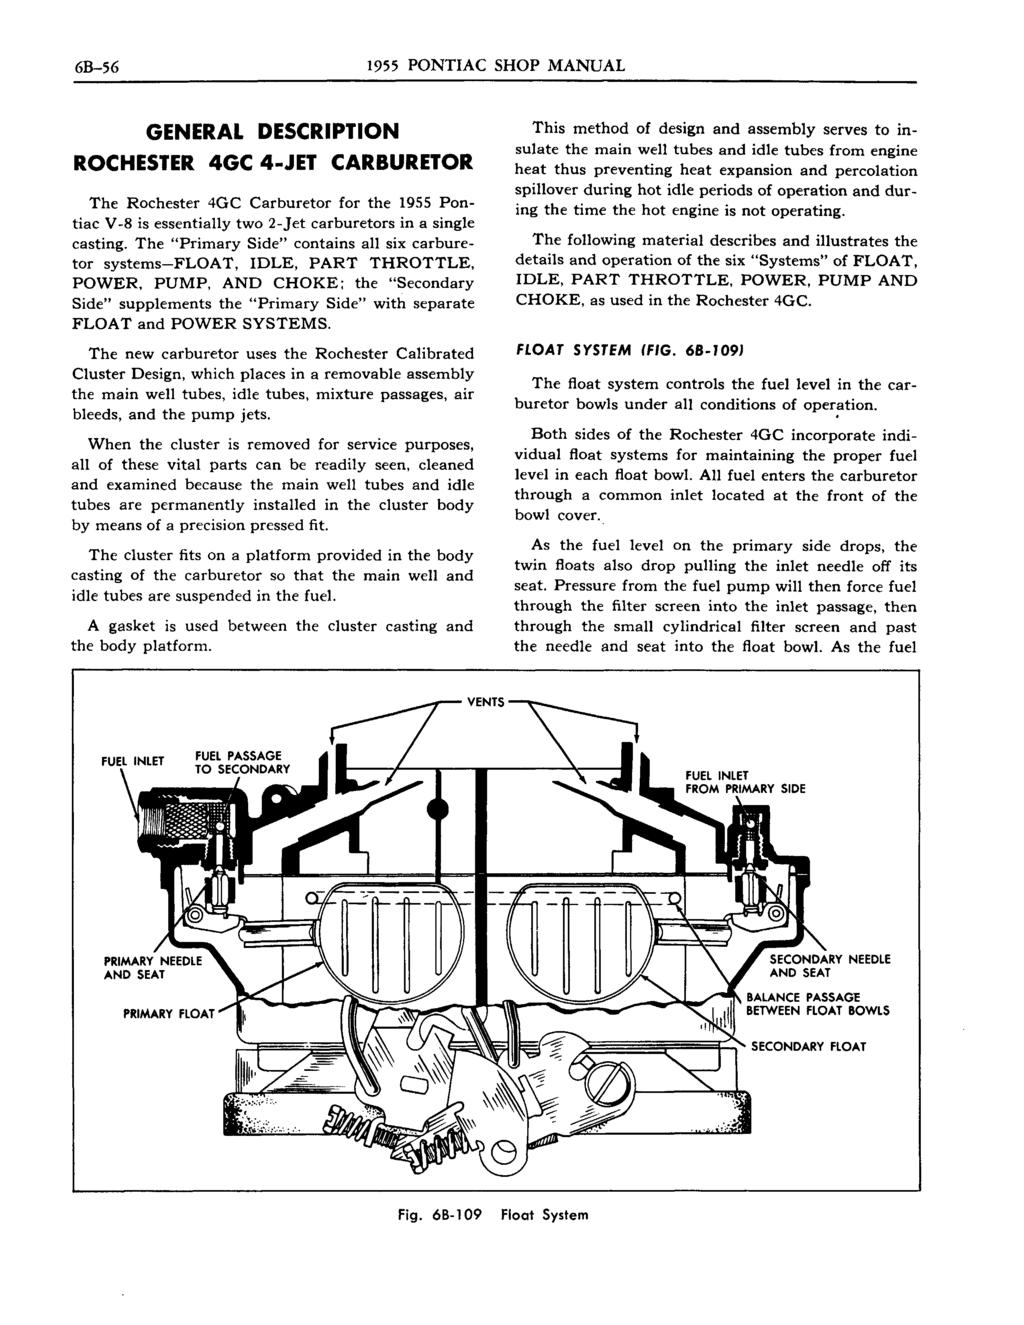 6B-56 1955 PONTIAC SHOP MANUAL GENERAL DESCRIPTION ROCHESTER 4GC 4-JET CARBURETOR The Rochester 4GC Carburetor for the 1955 Pontiac V -8 is essentially two 2 -J et carburetors in a single casting.